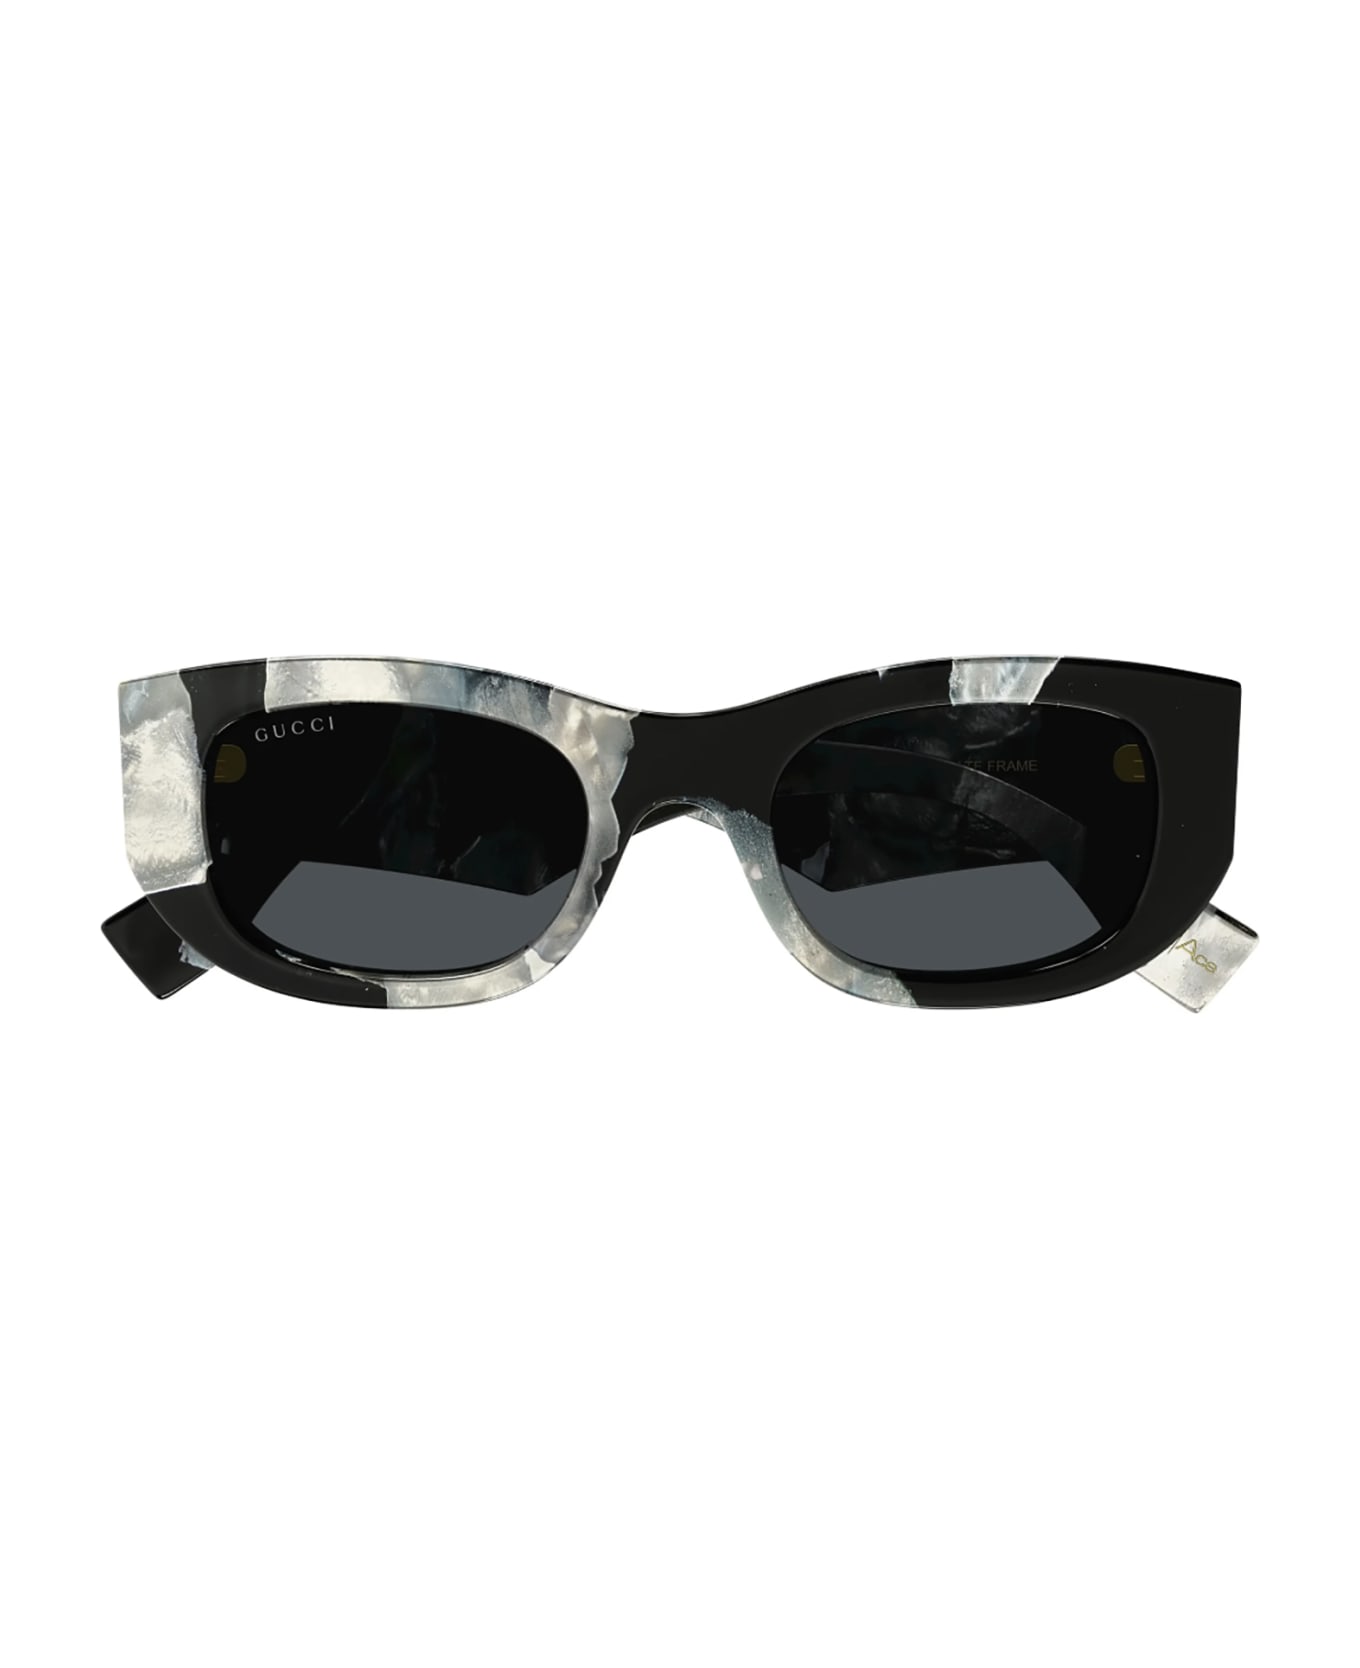 Gucci Eyewear GG1627S Sunglasses - Black Black Grey